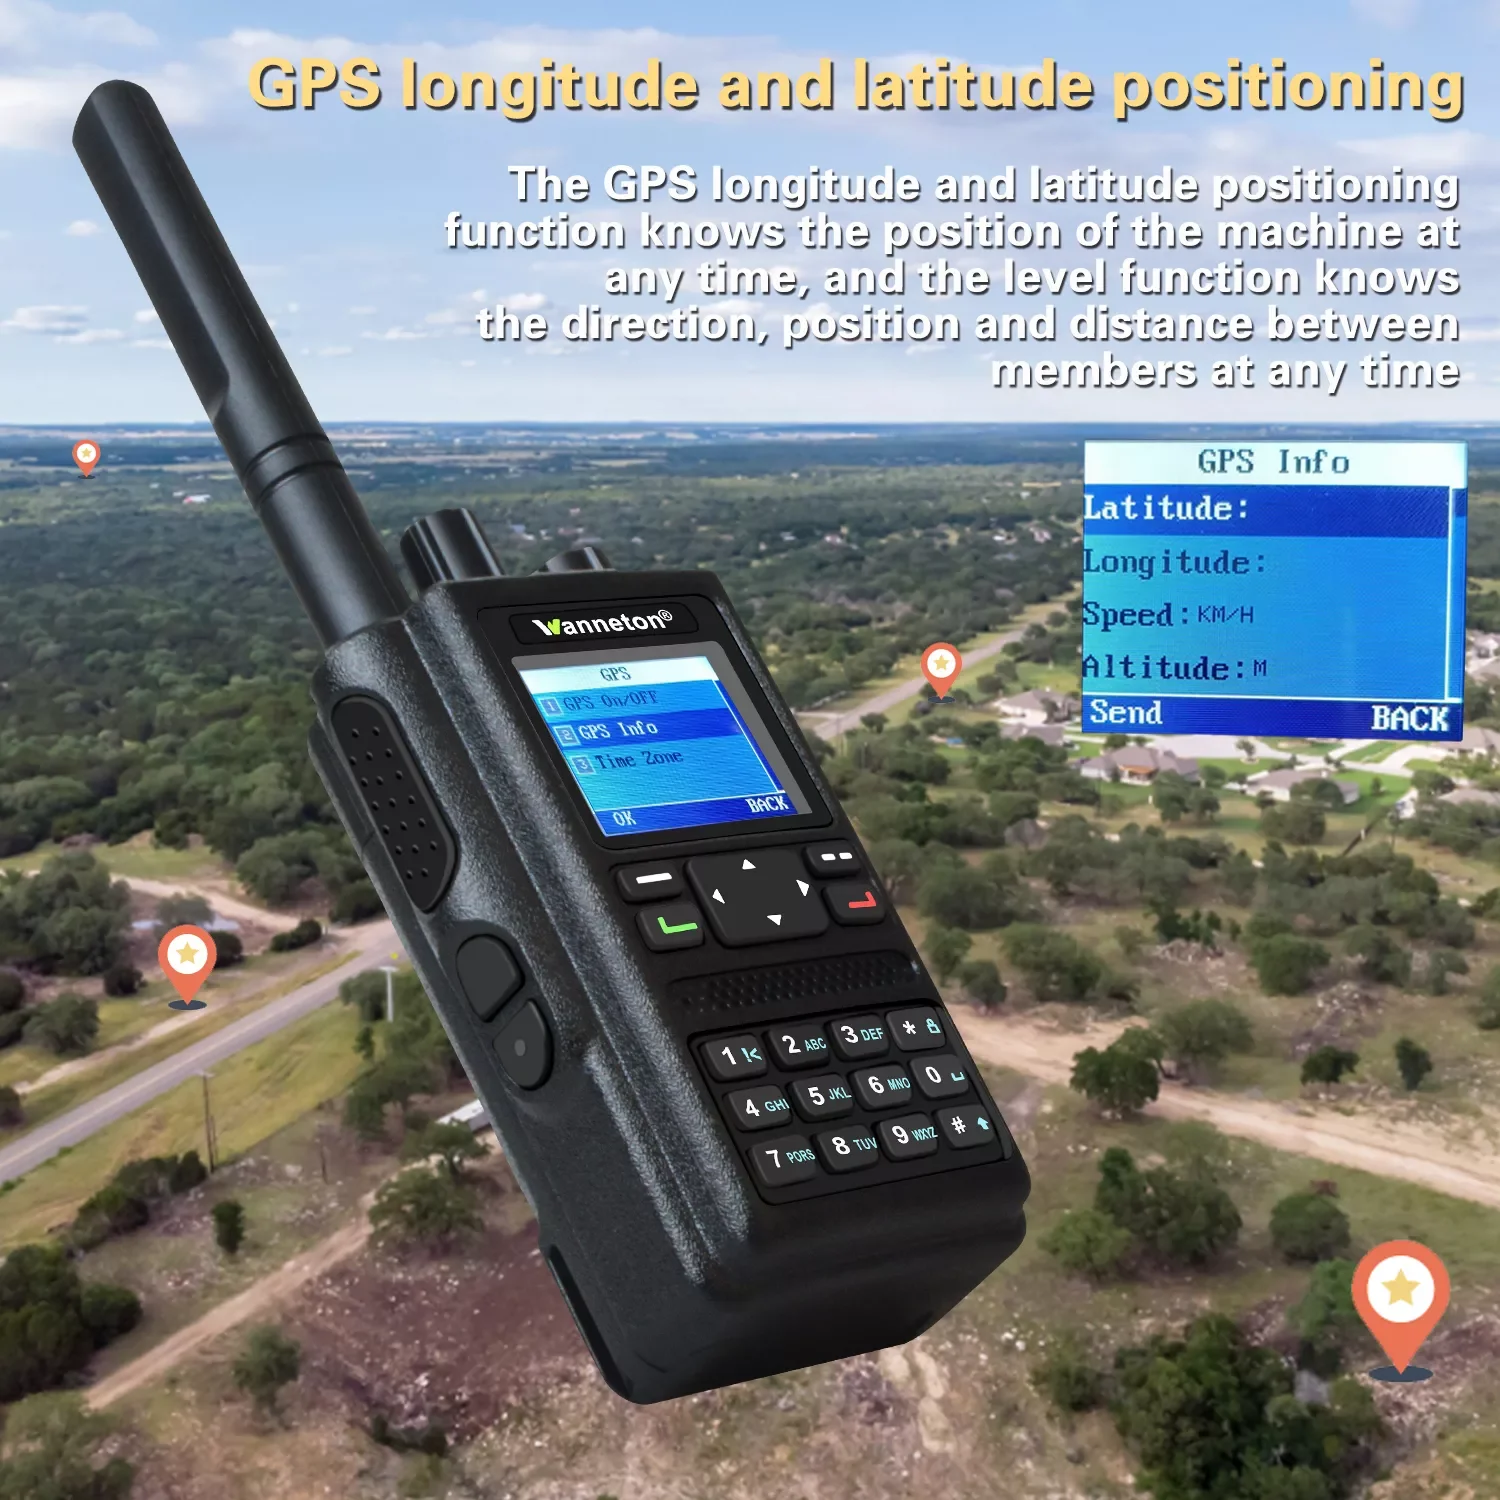 NEW UHF VHF DMR Digital Analog Walkie Talkie Ham Radio GPS APRS Recording Ranging function Two Way Radio Amateur enlarge